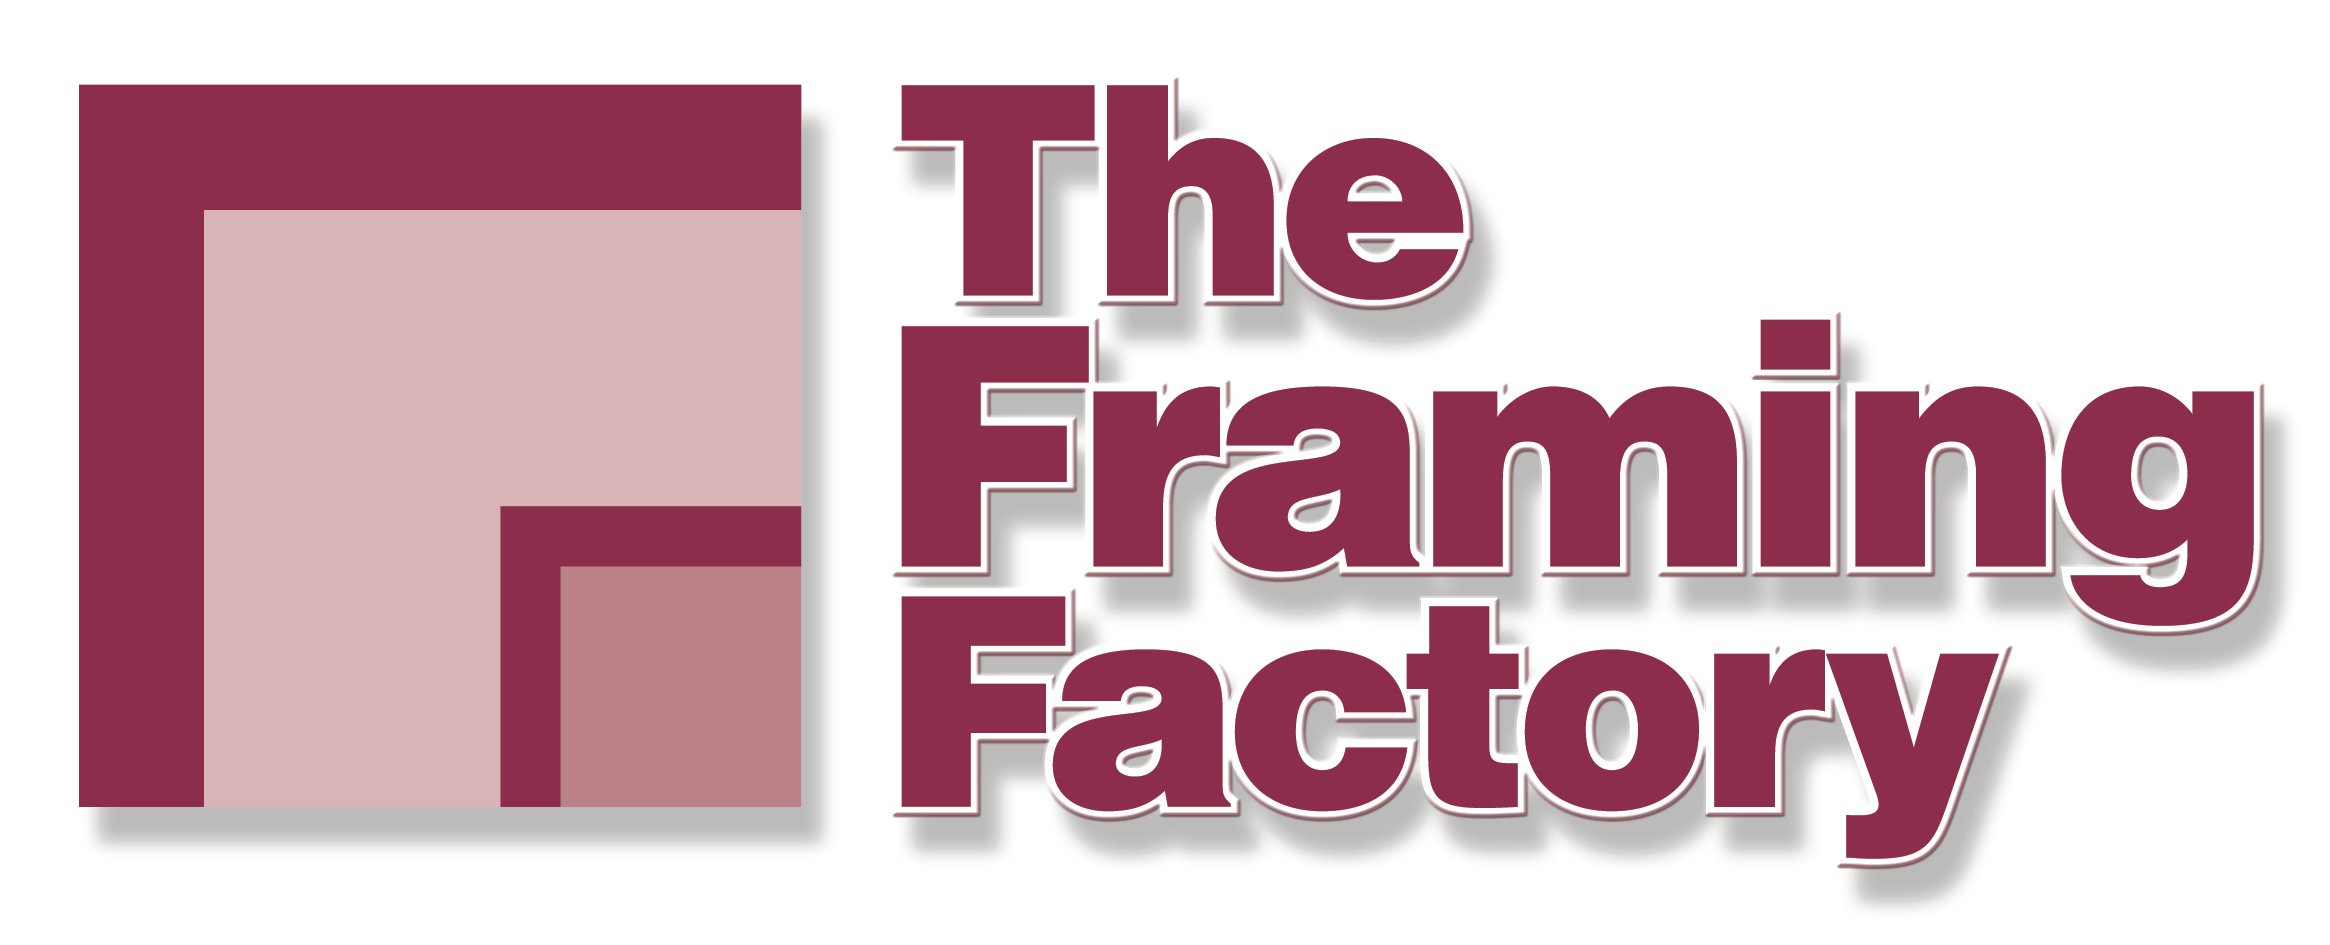 Framing Factory Logo 3D.jpg